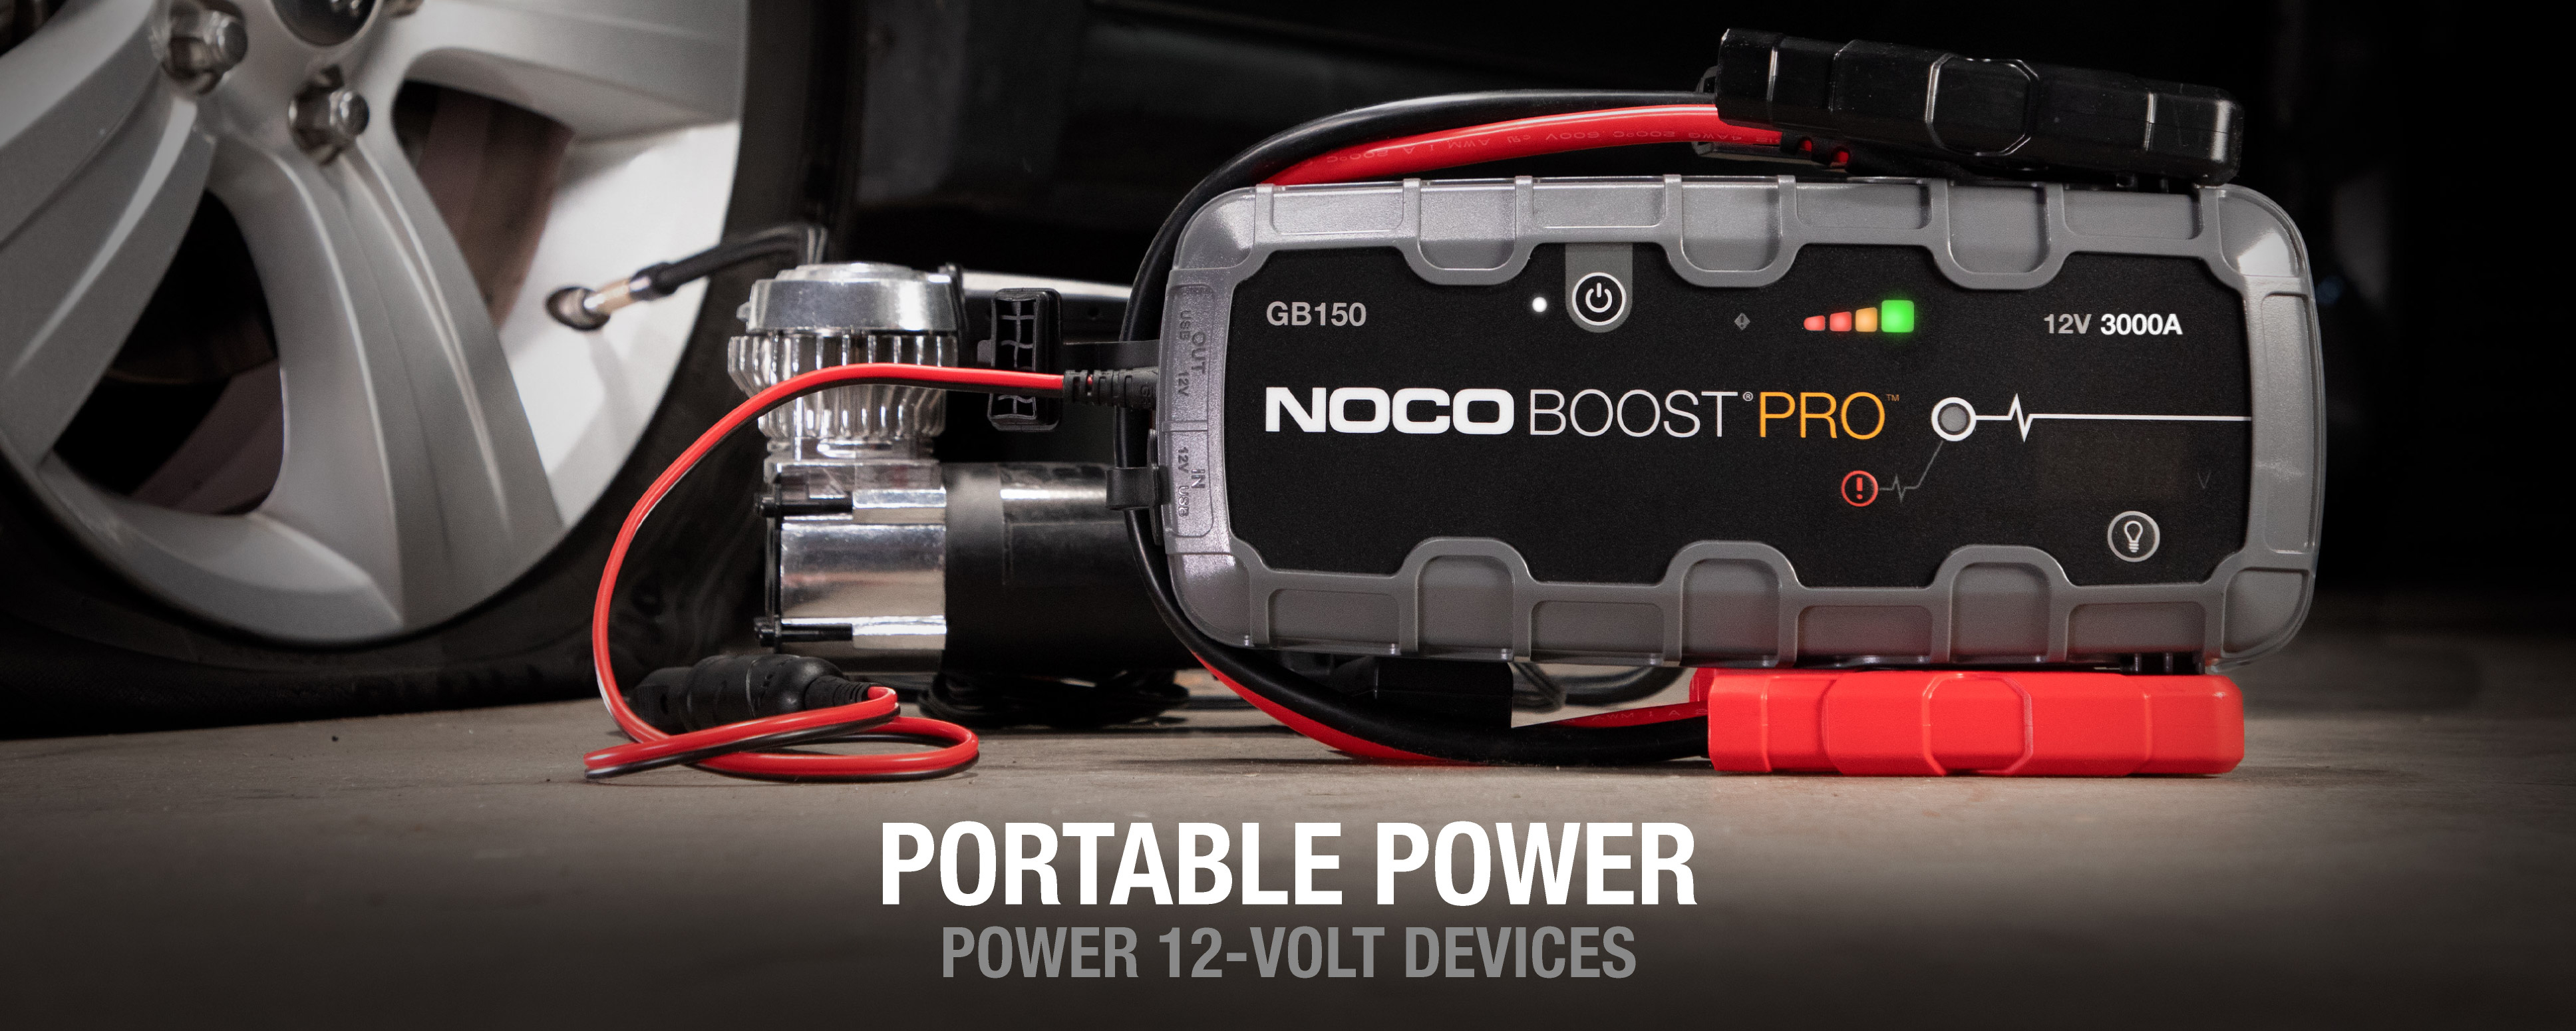 noco-gb150-portable-12-volt-power-3000a2x.jpg